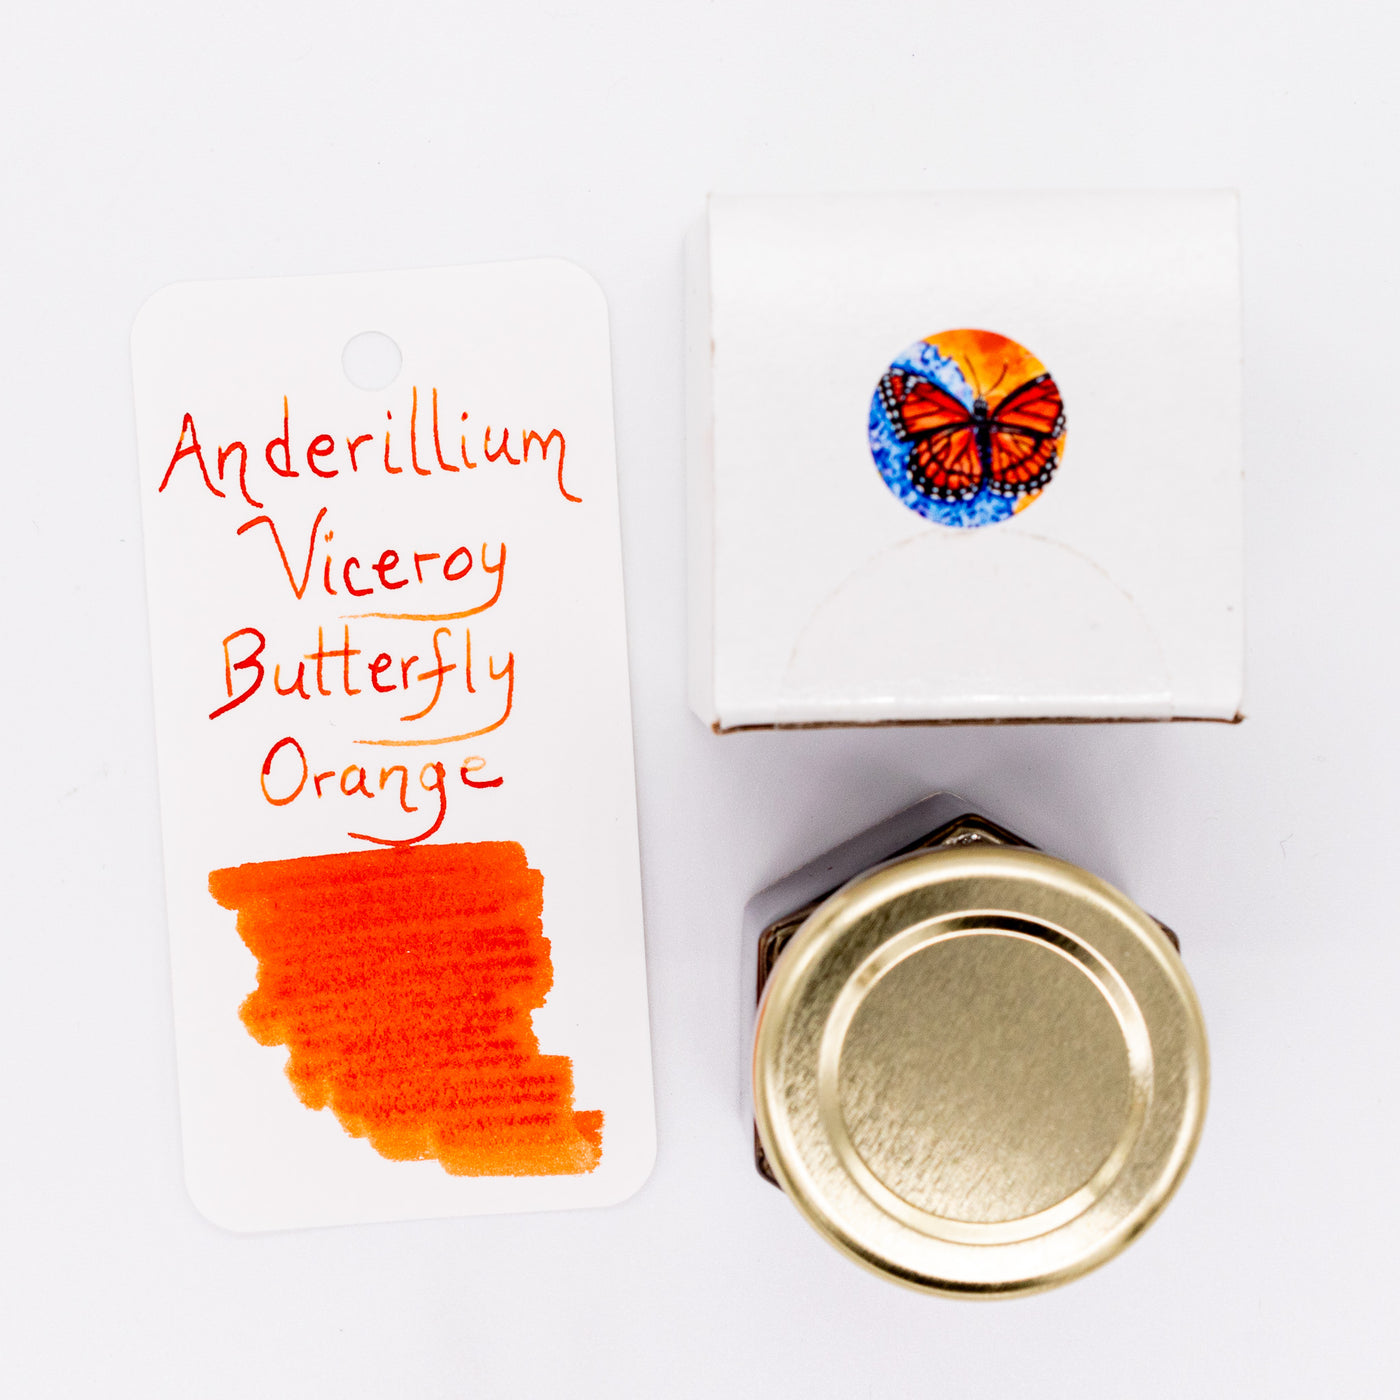 Anderillium Viceroy Butterfly Orange Ink Bottle 1.5oz glass